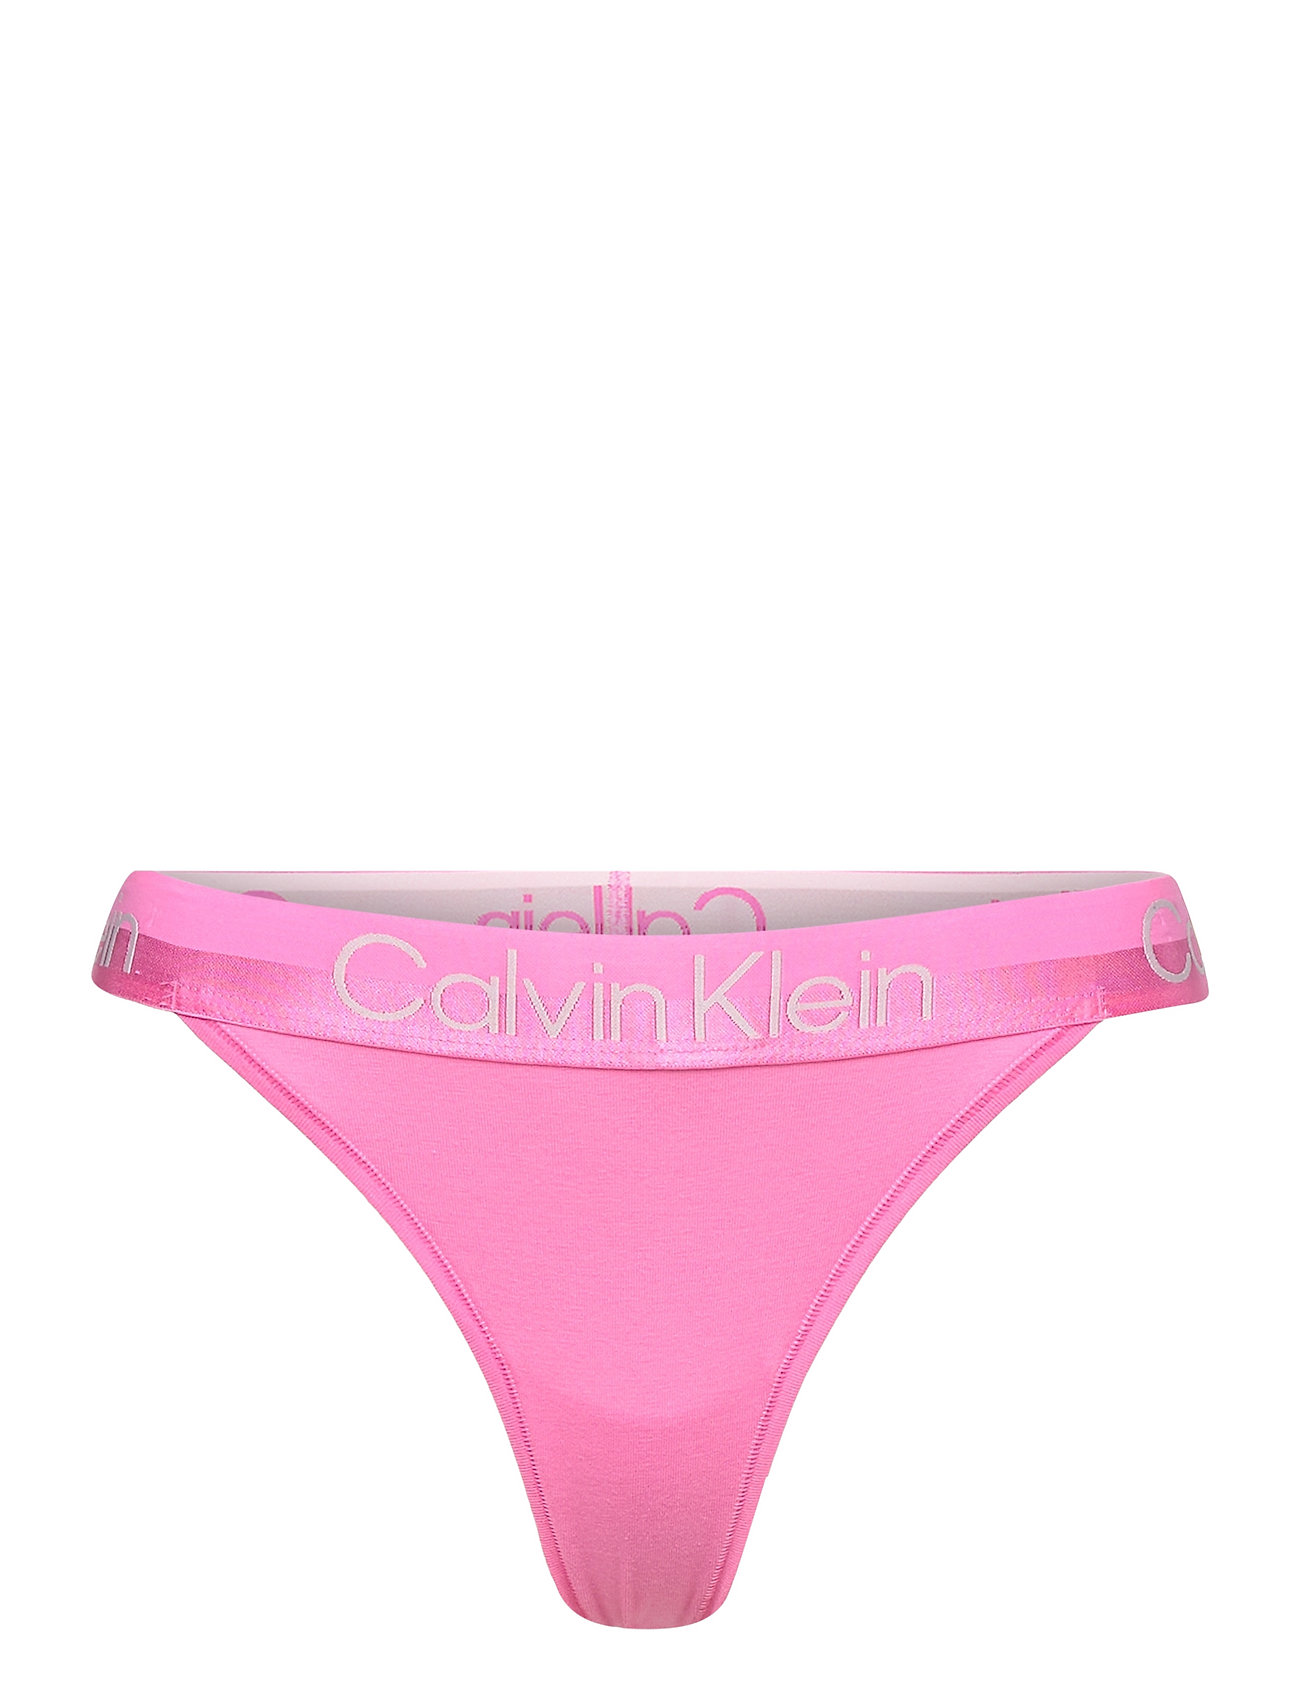 Calvin Klein Thong – panties – shop at Booztlet